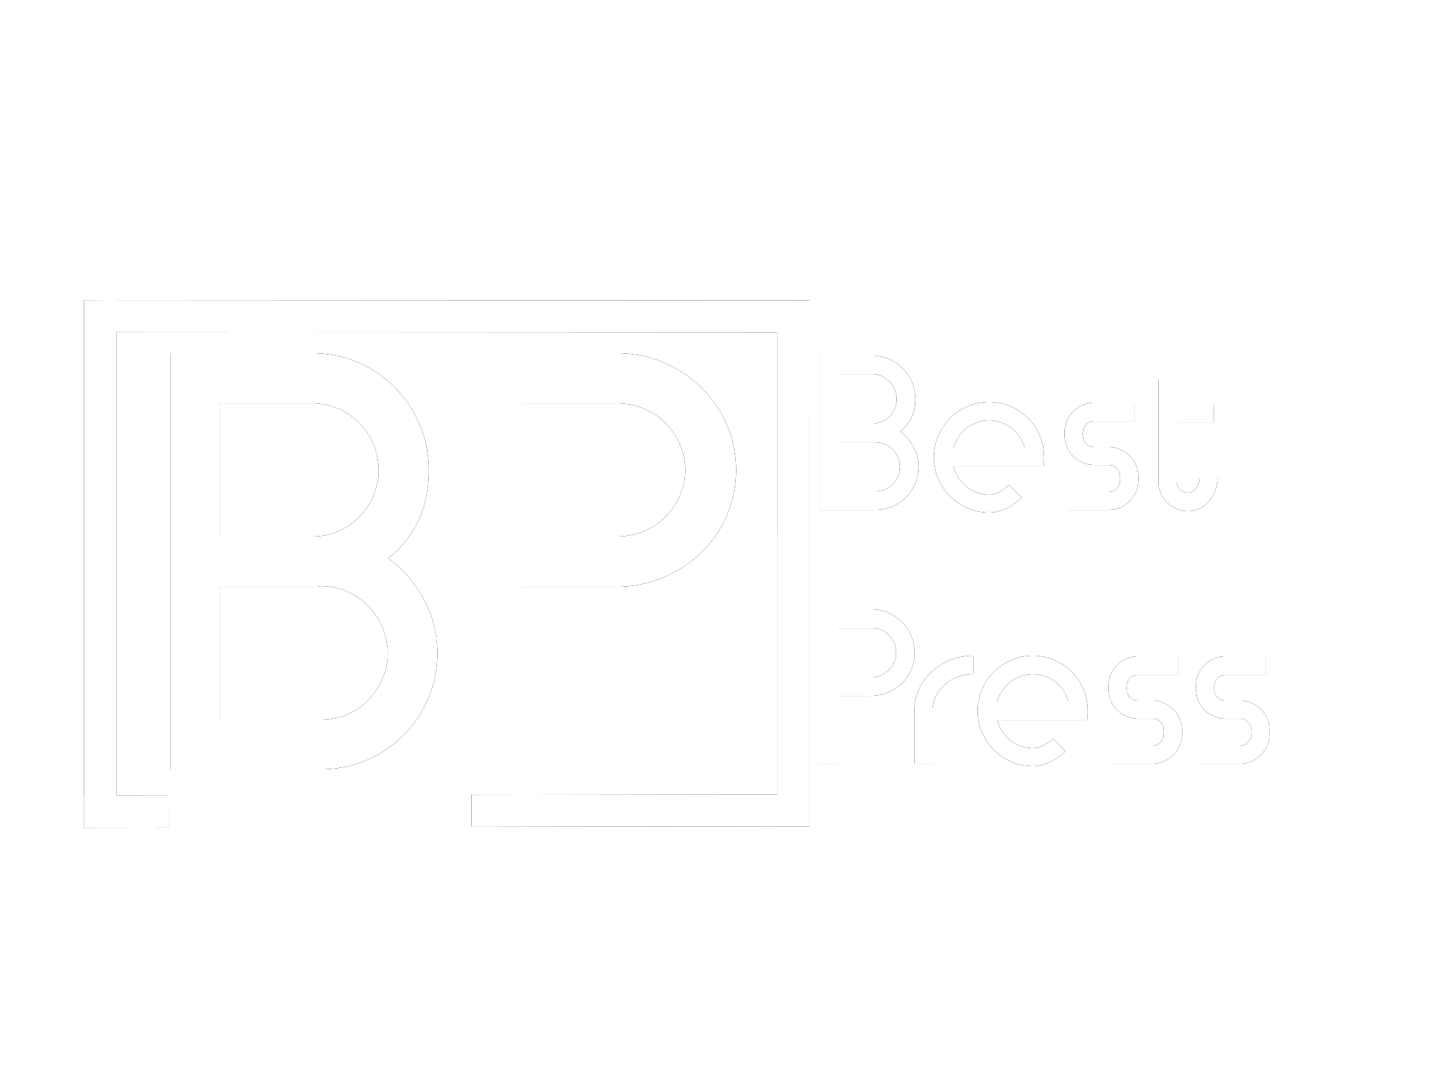 BestPress